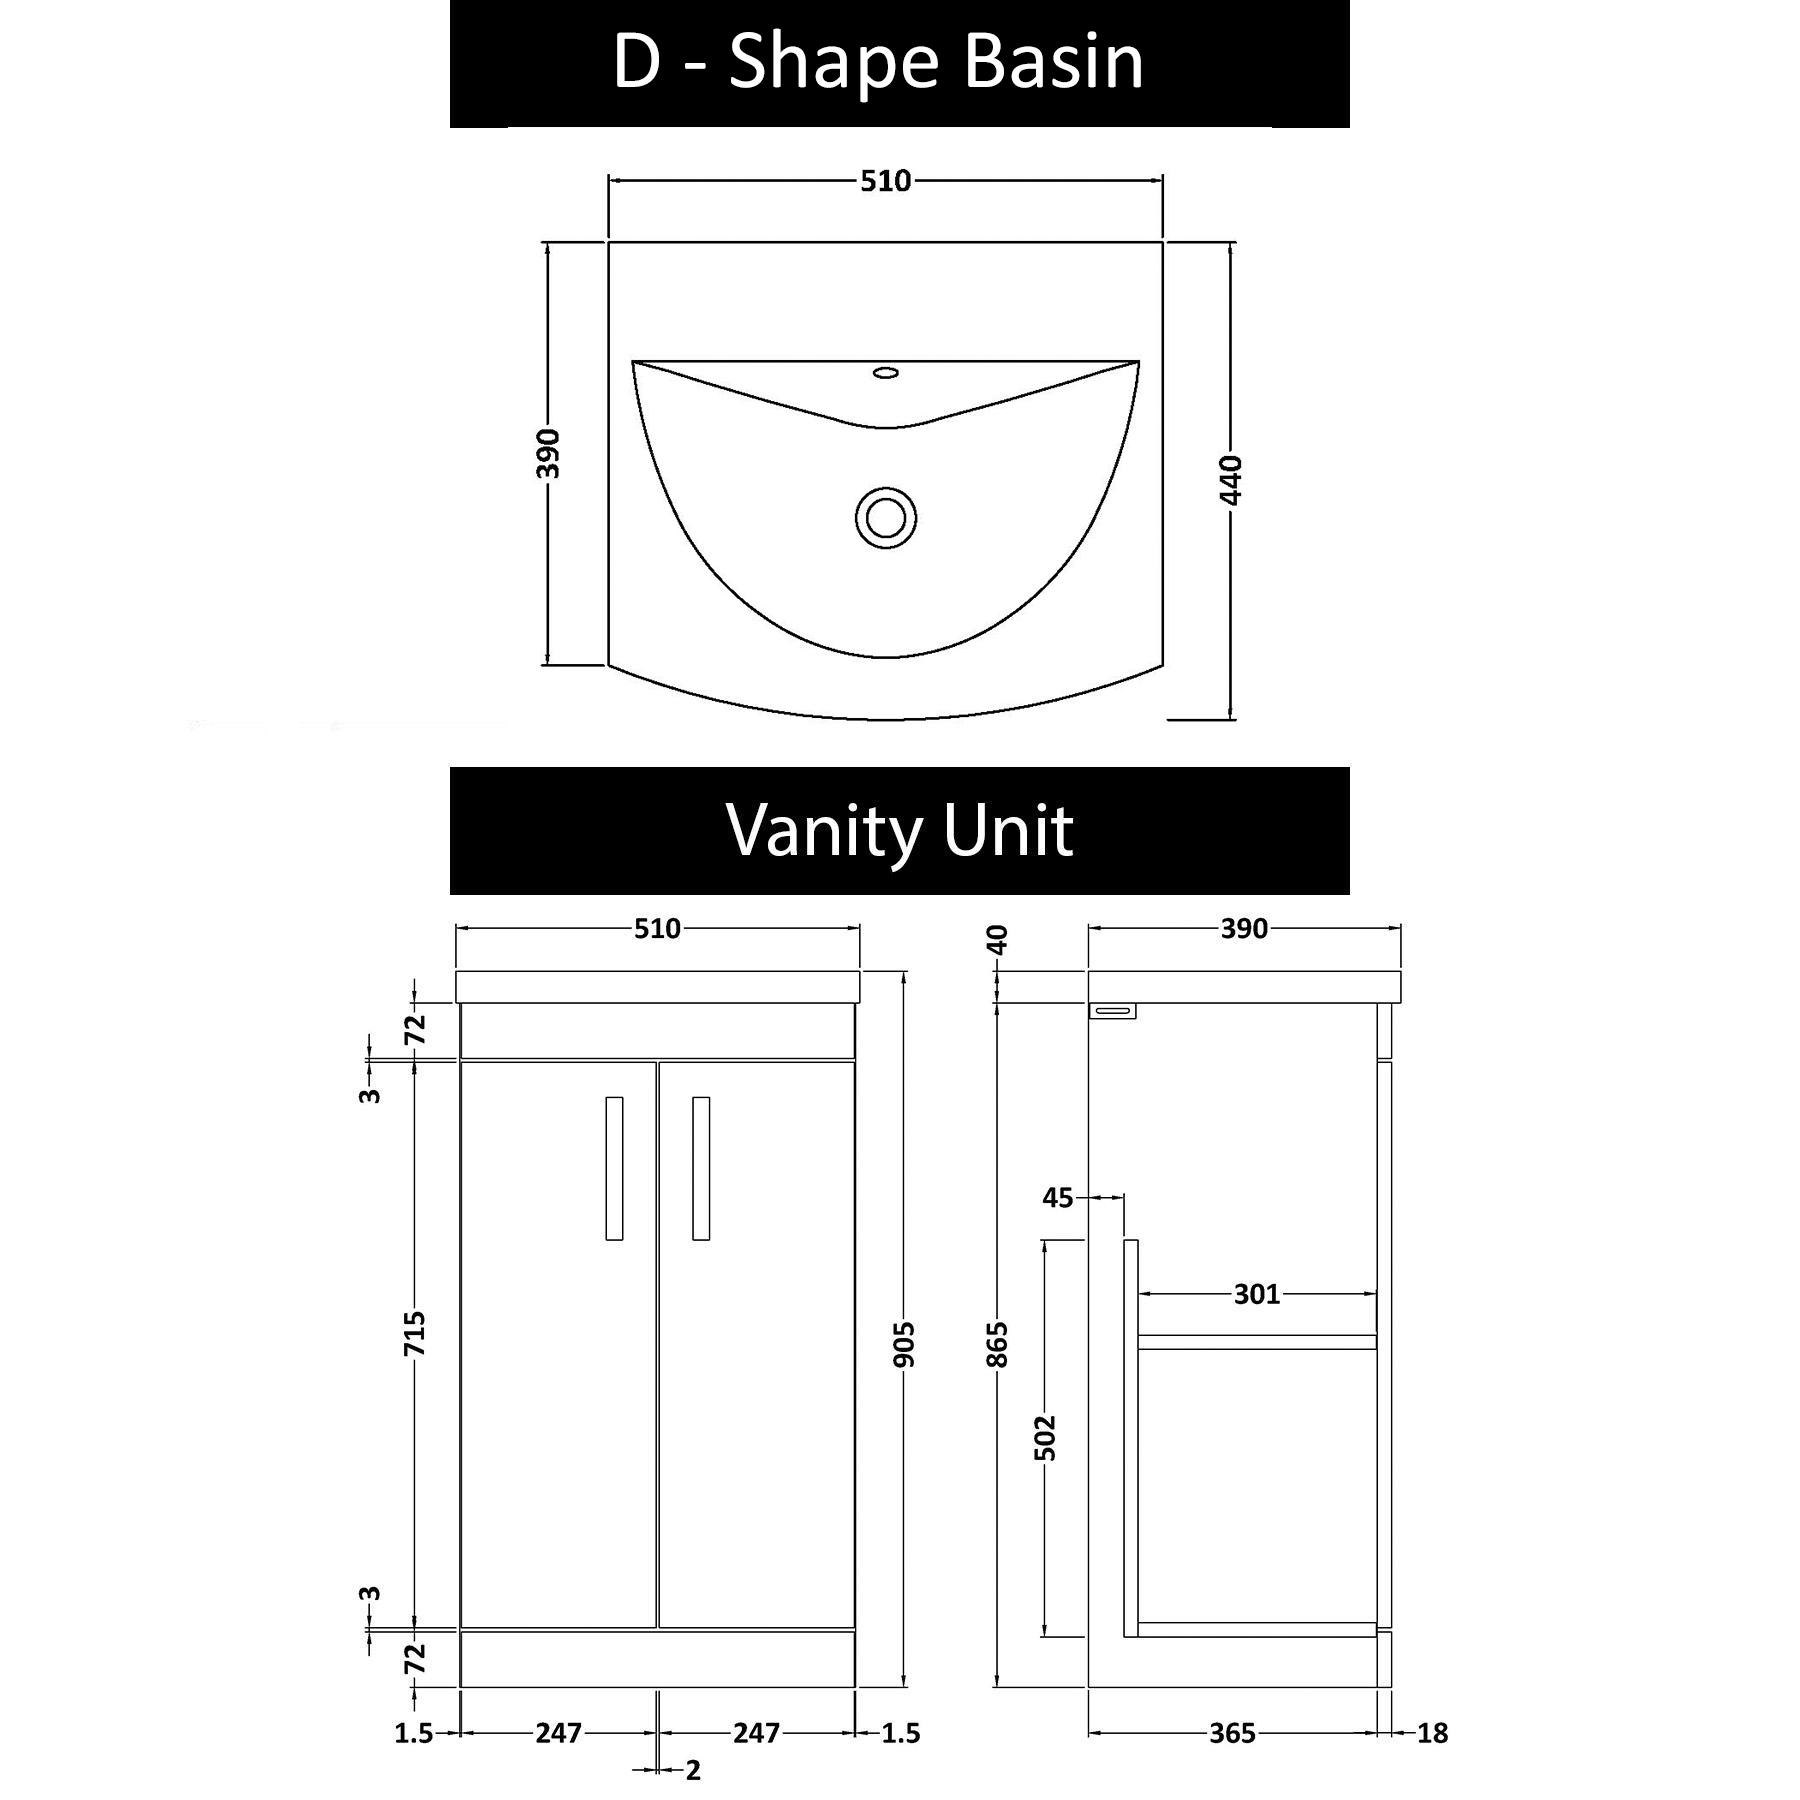  Marbella 500/600/800mm Gloss White 2 Door Floor Standing Vanity Unit with Curved Basin